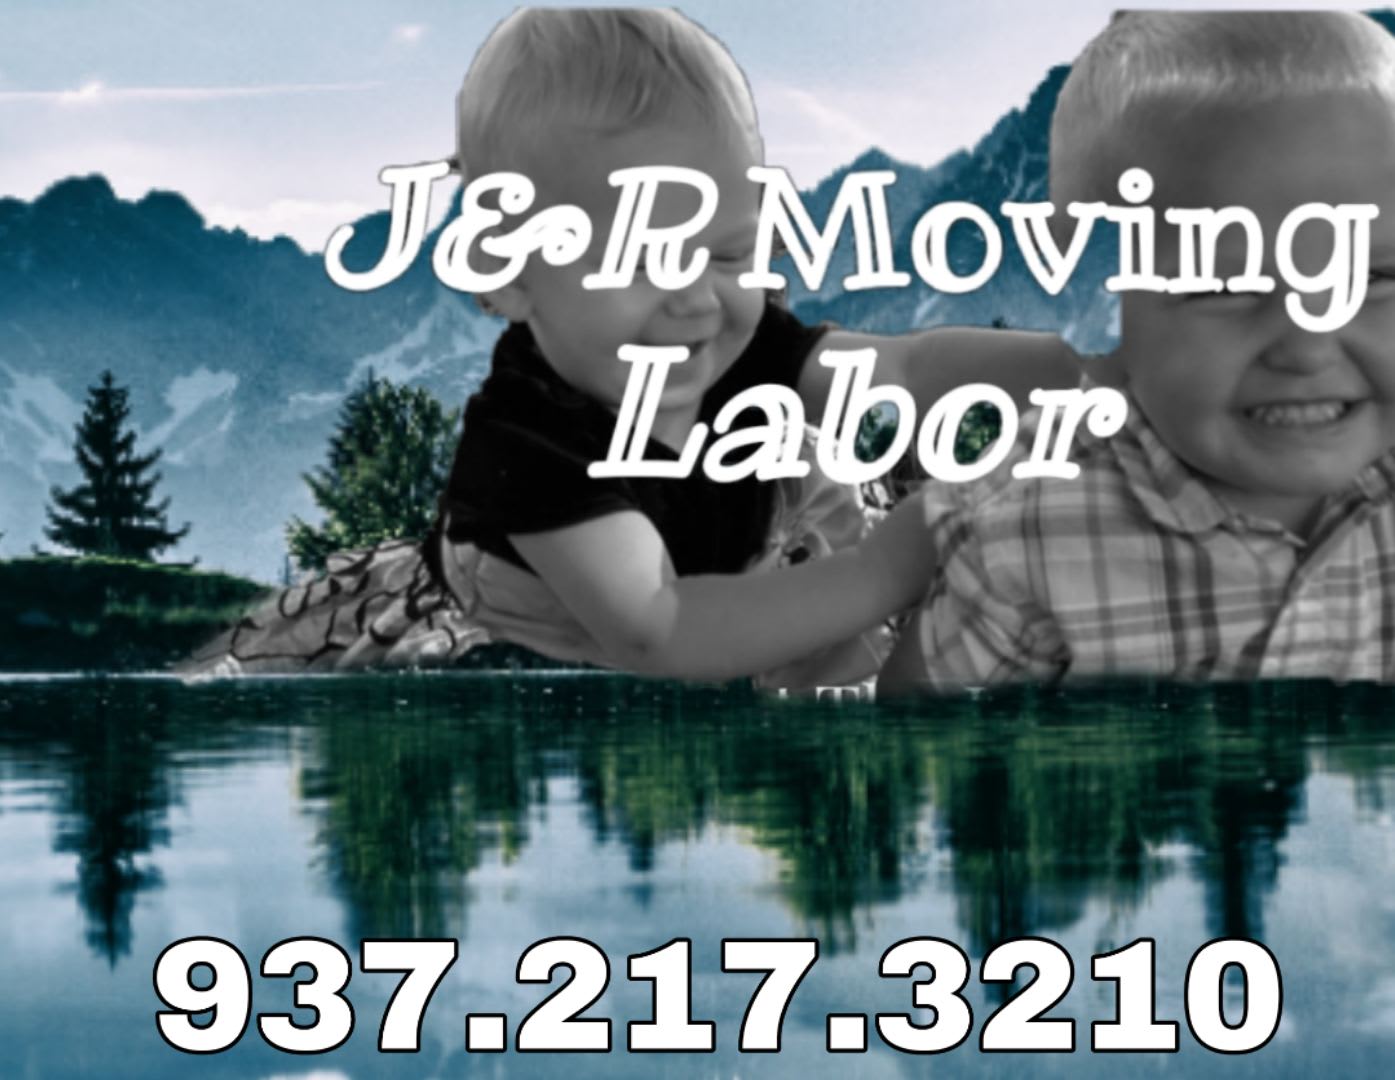 J&R Moving